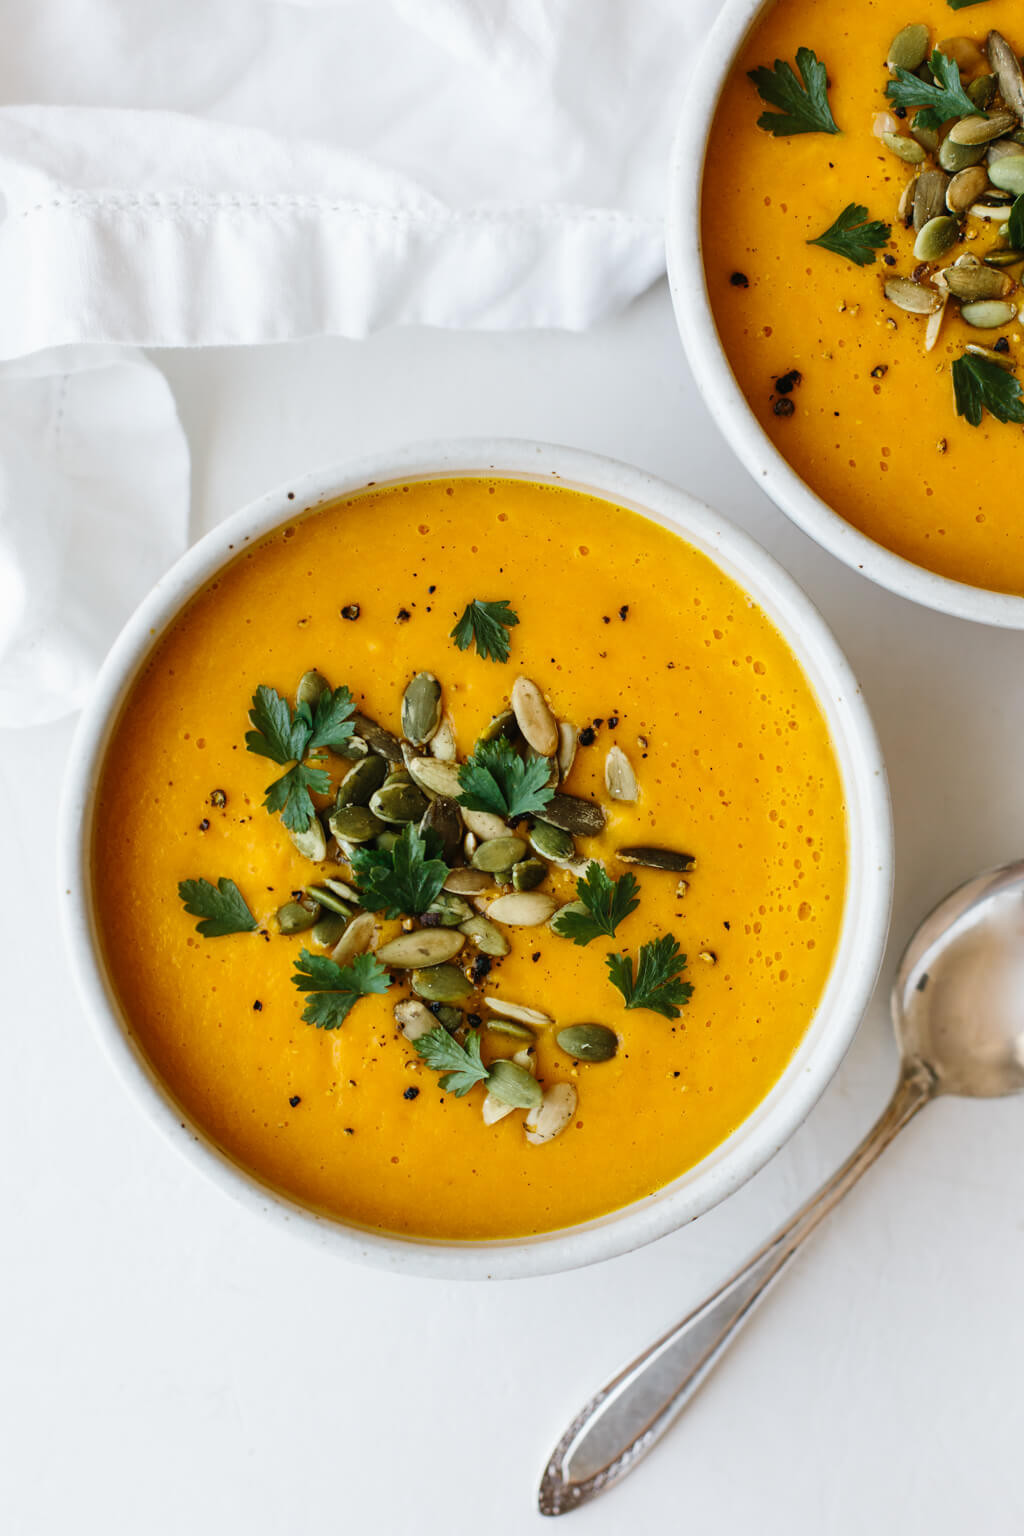 Healthy Butternut Squash Soup Recipe
 An easy video recipe for butternut squash soup from